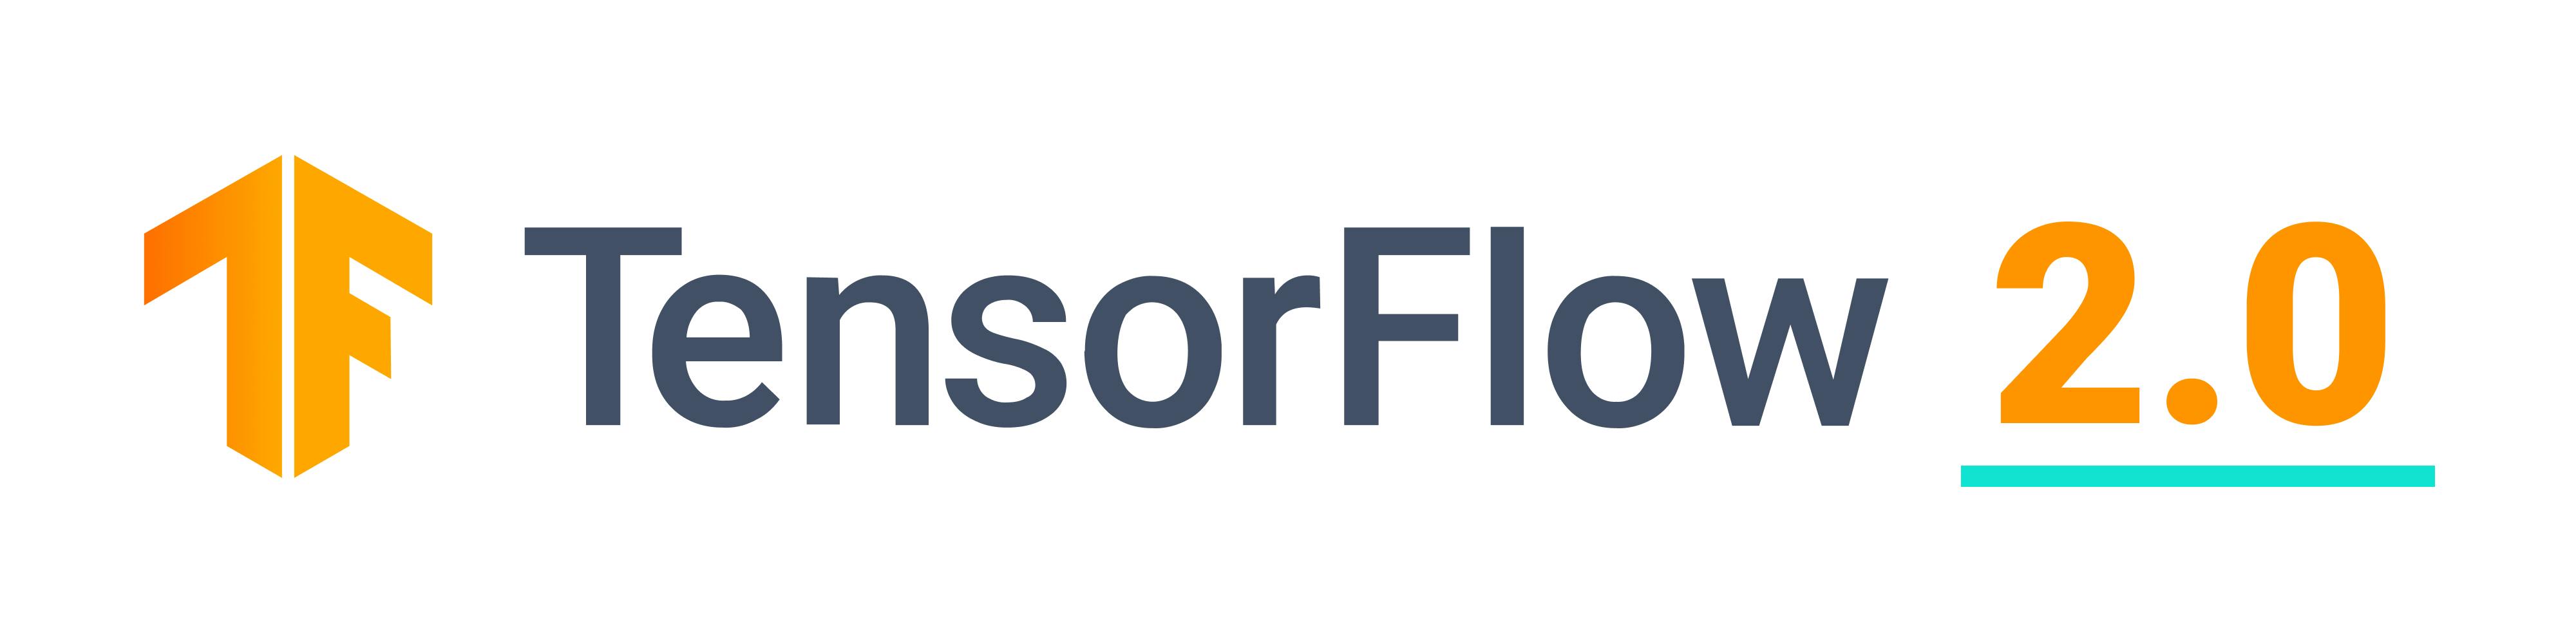 tensorflow 2.0 logo